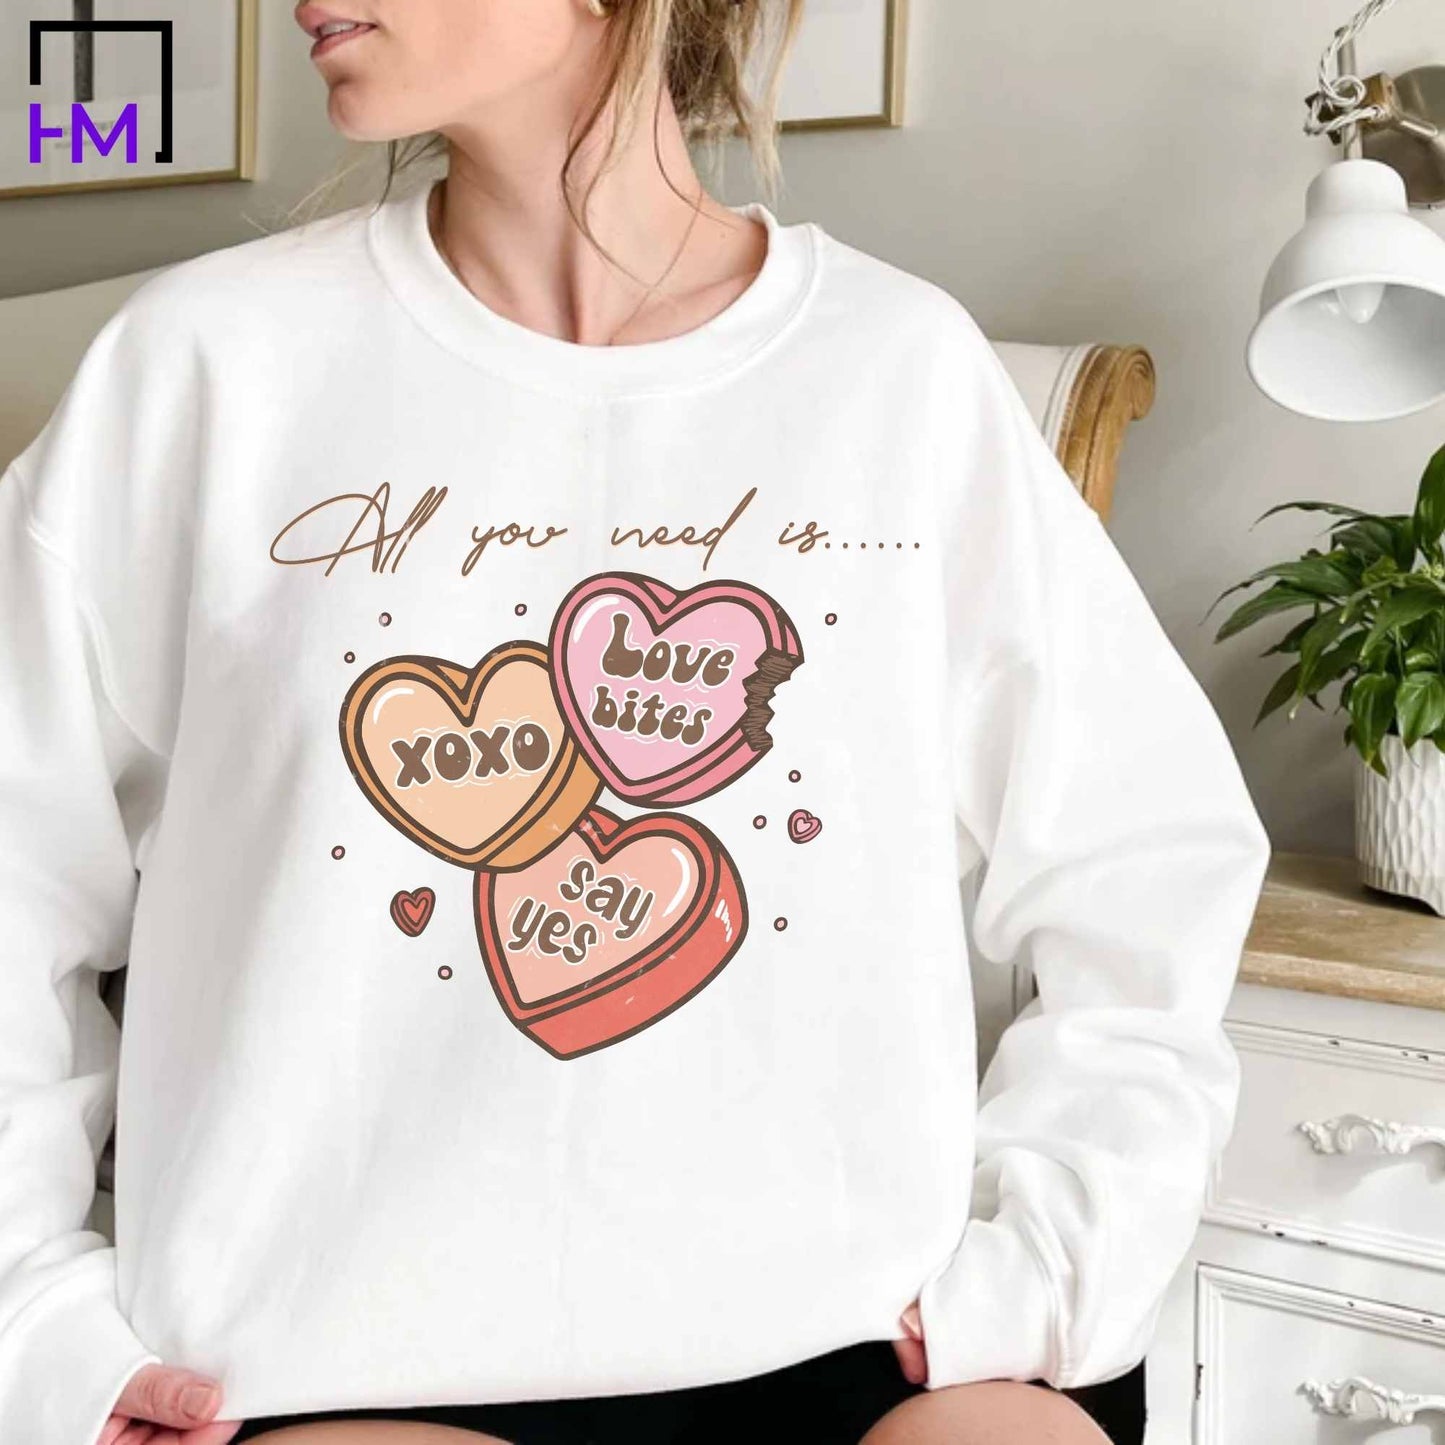 Say Yes, Retro Valentines Day Shirt, Womens Valentines Day Gift, Couples Valentine Shirt, Girl Valentine Shirt, Self Love Valentine HMDesignStudioUS